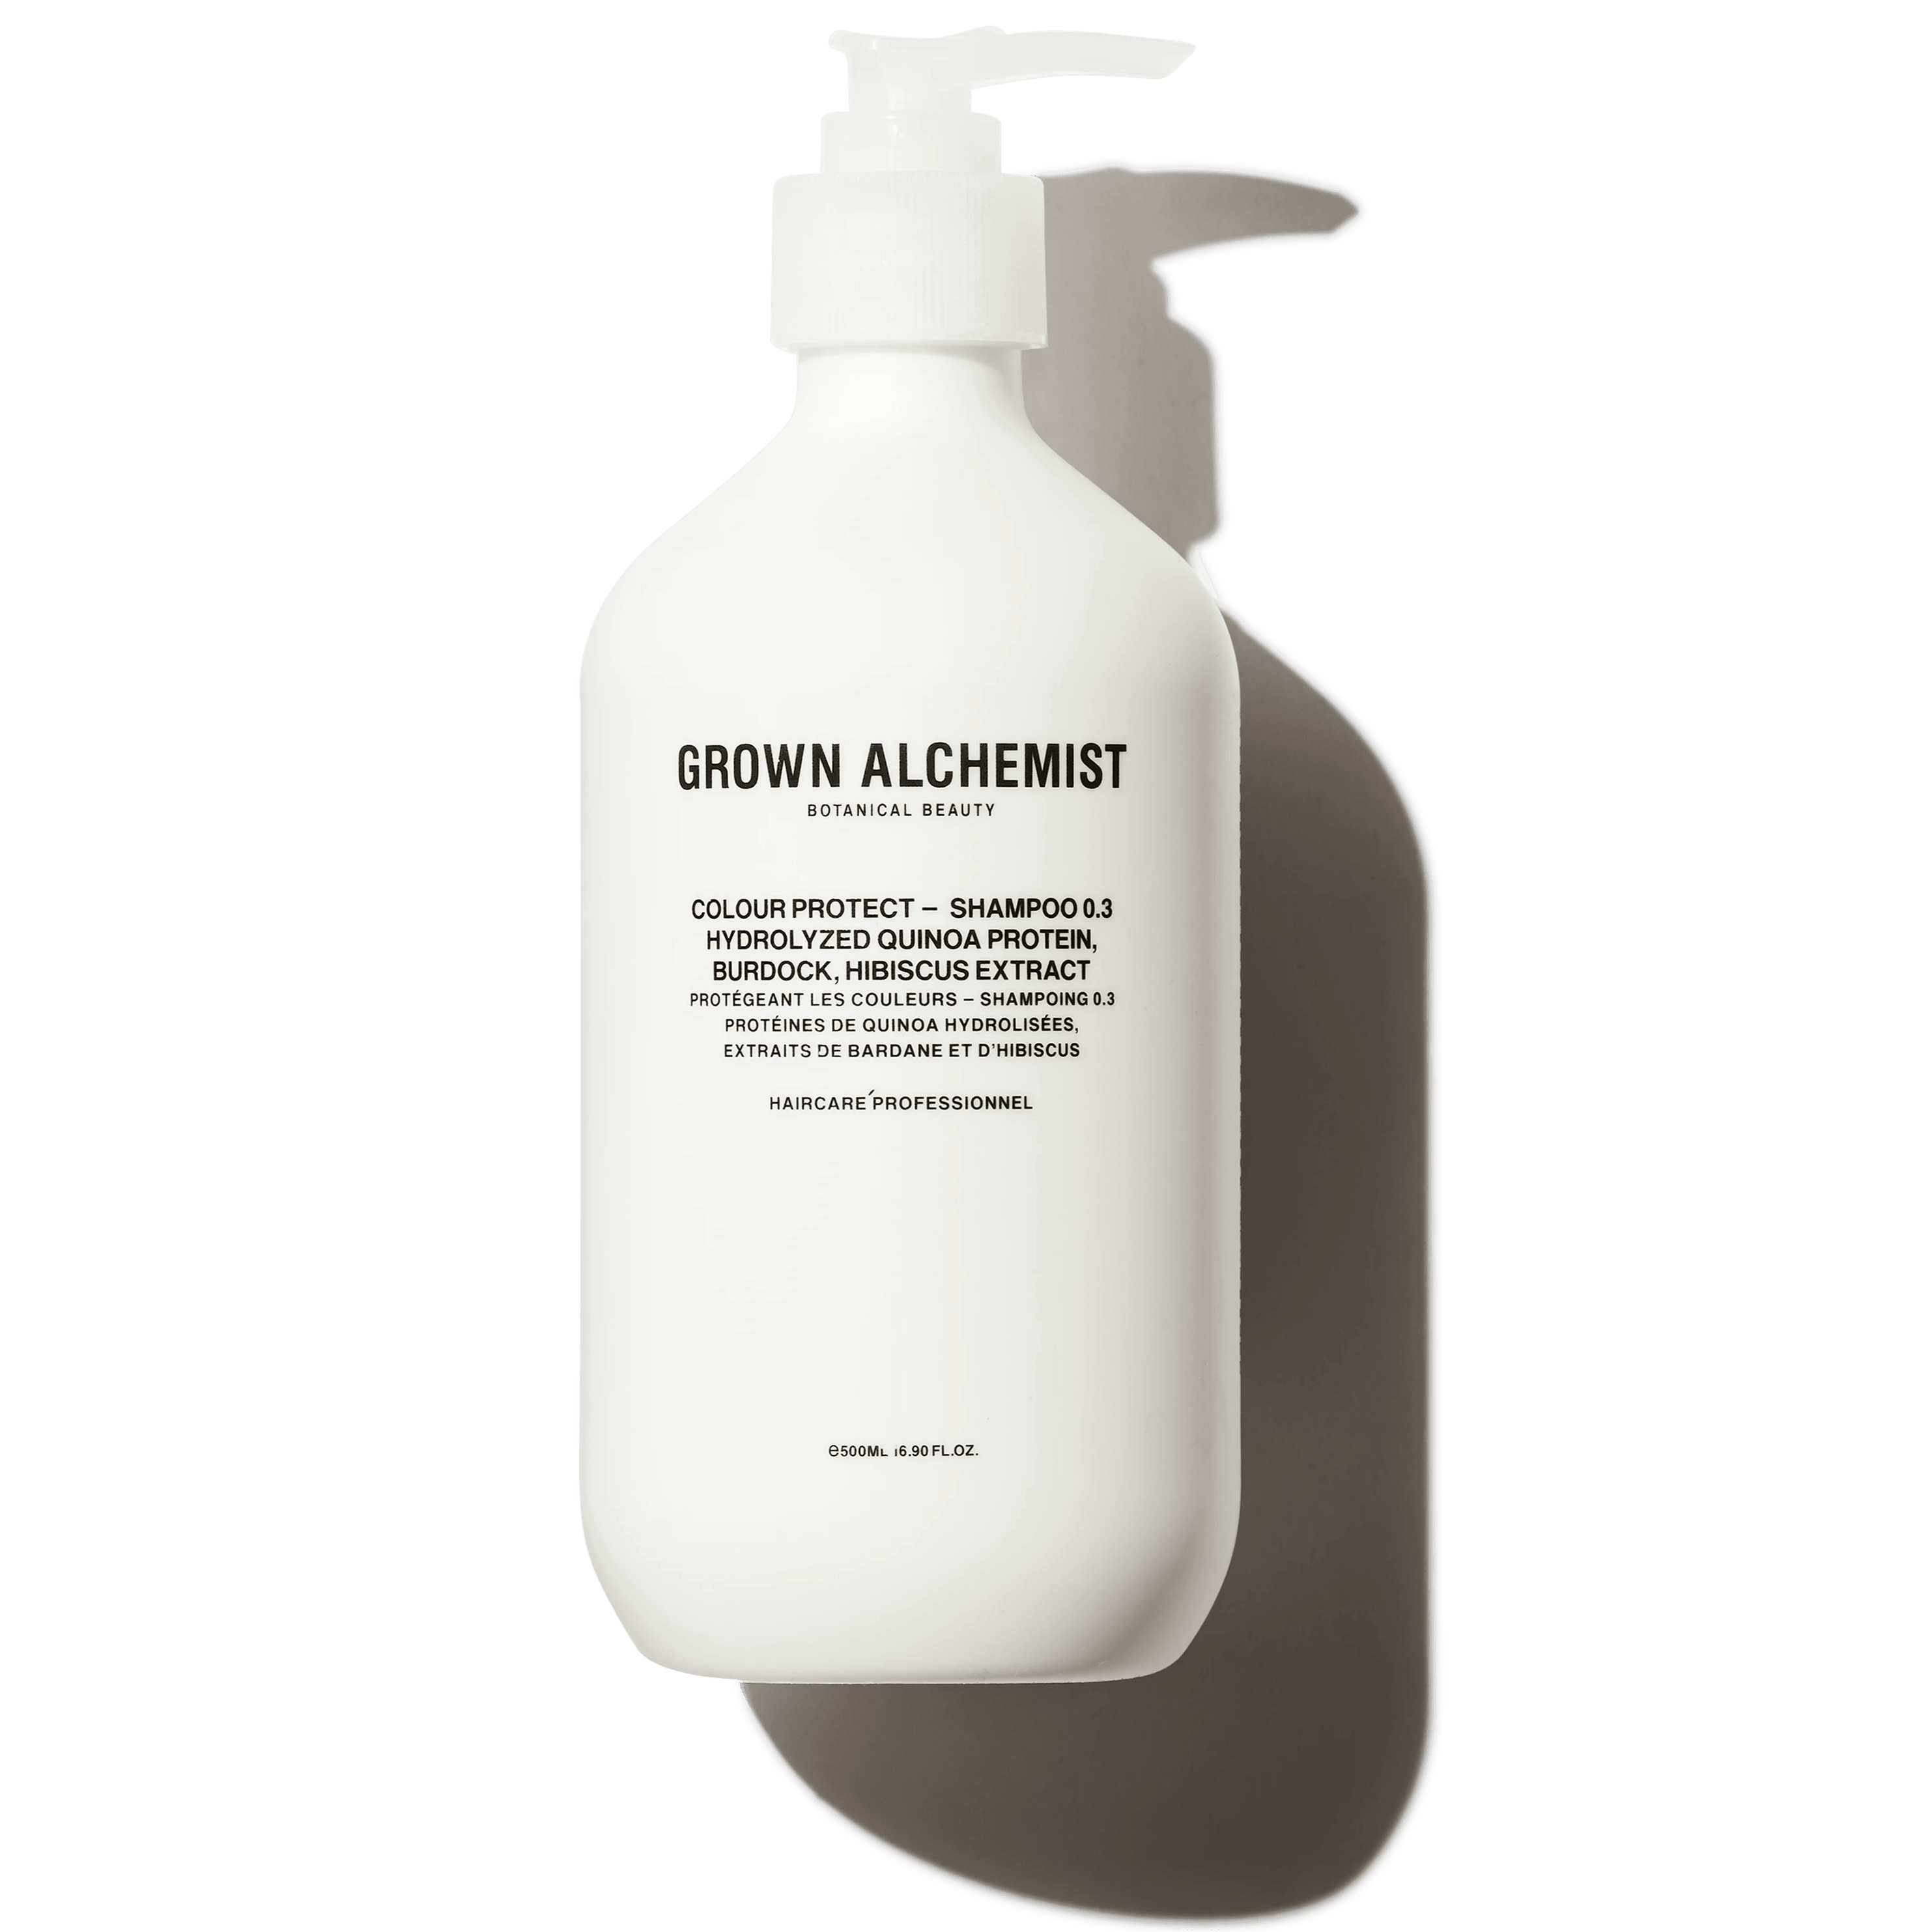 Grown Alchemist Colour Protect - Shampoo 0.3: Hydrolyzed Quinoa Protein, Burdock, Hibiscus Extract, 500ml